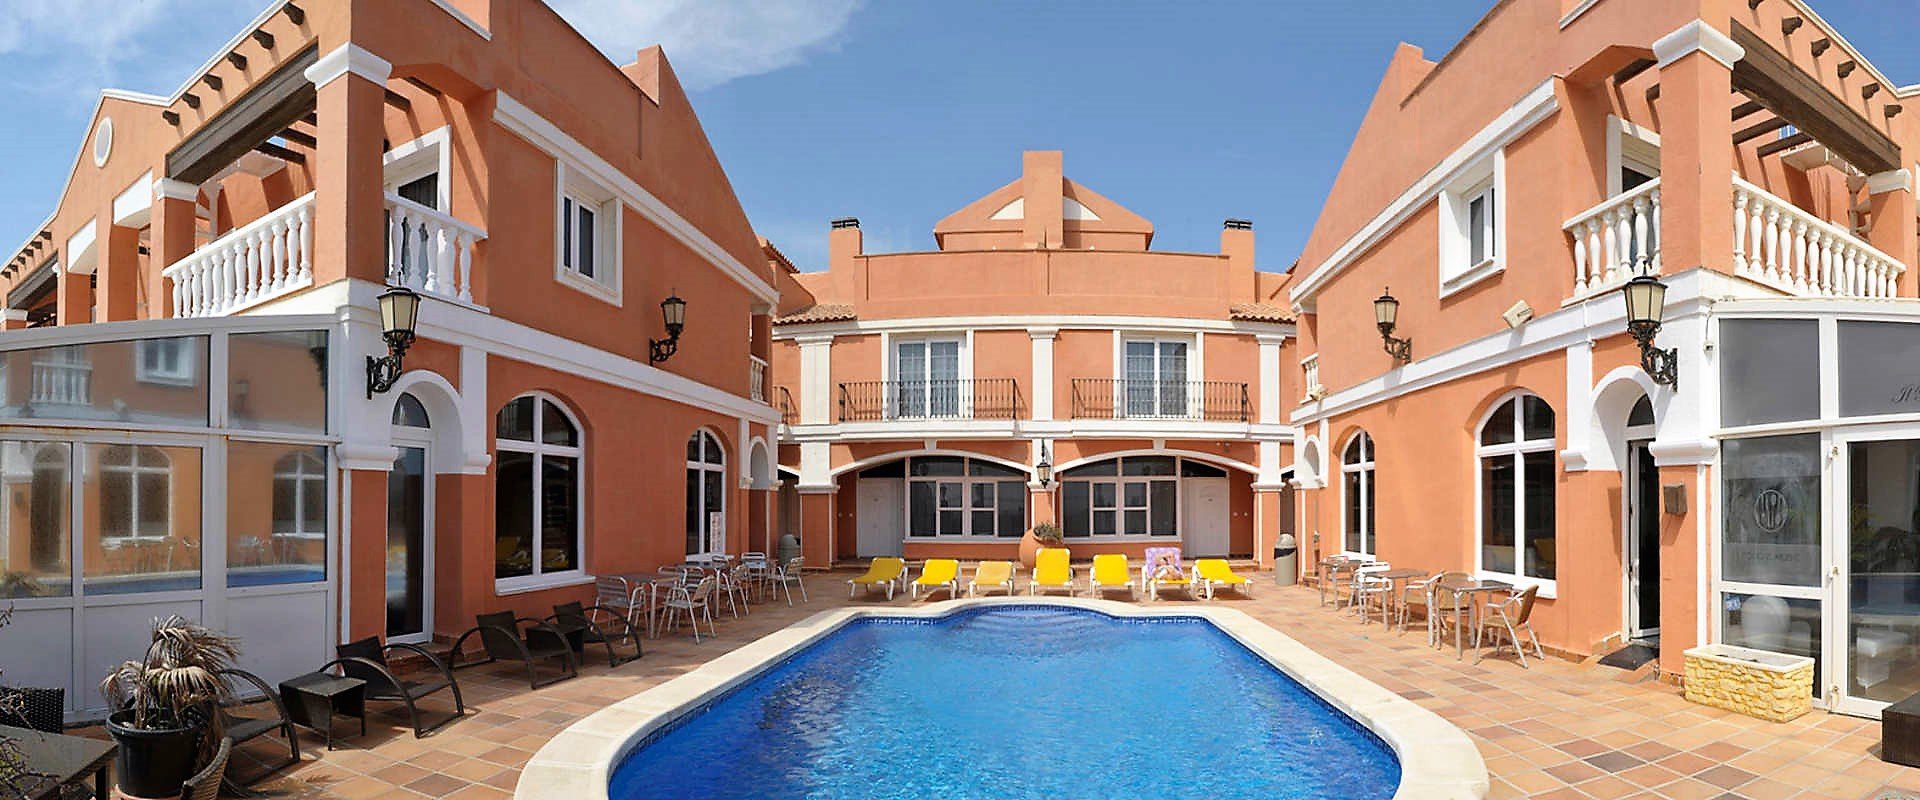 Explore a aparthotel full of surprises Lloyds Beach Club Aparthotel Torrevieja, Alicante